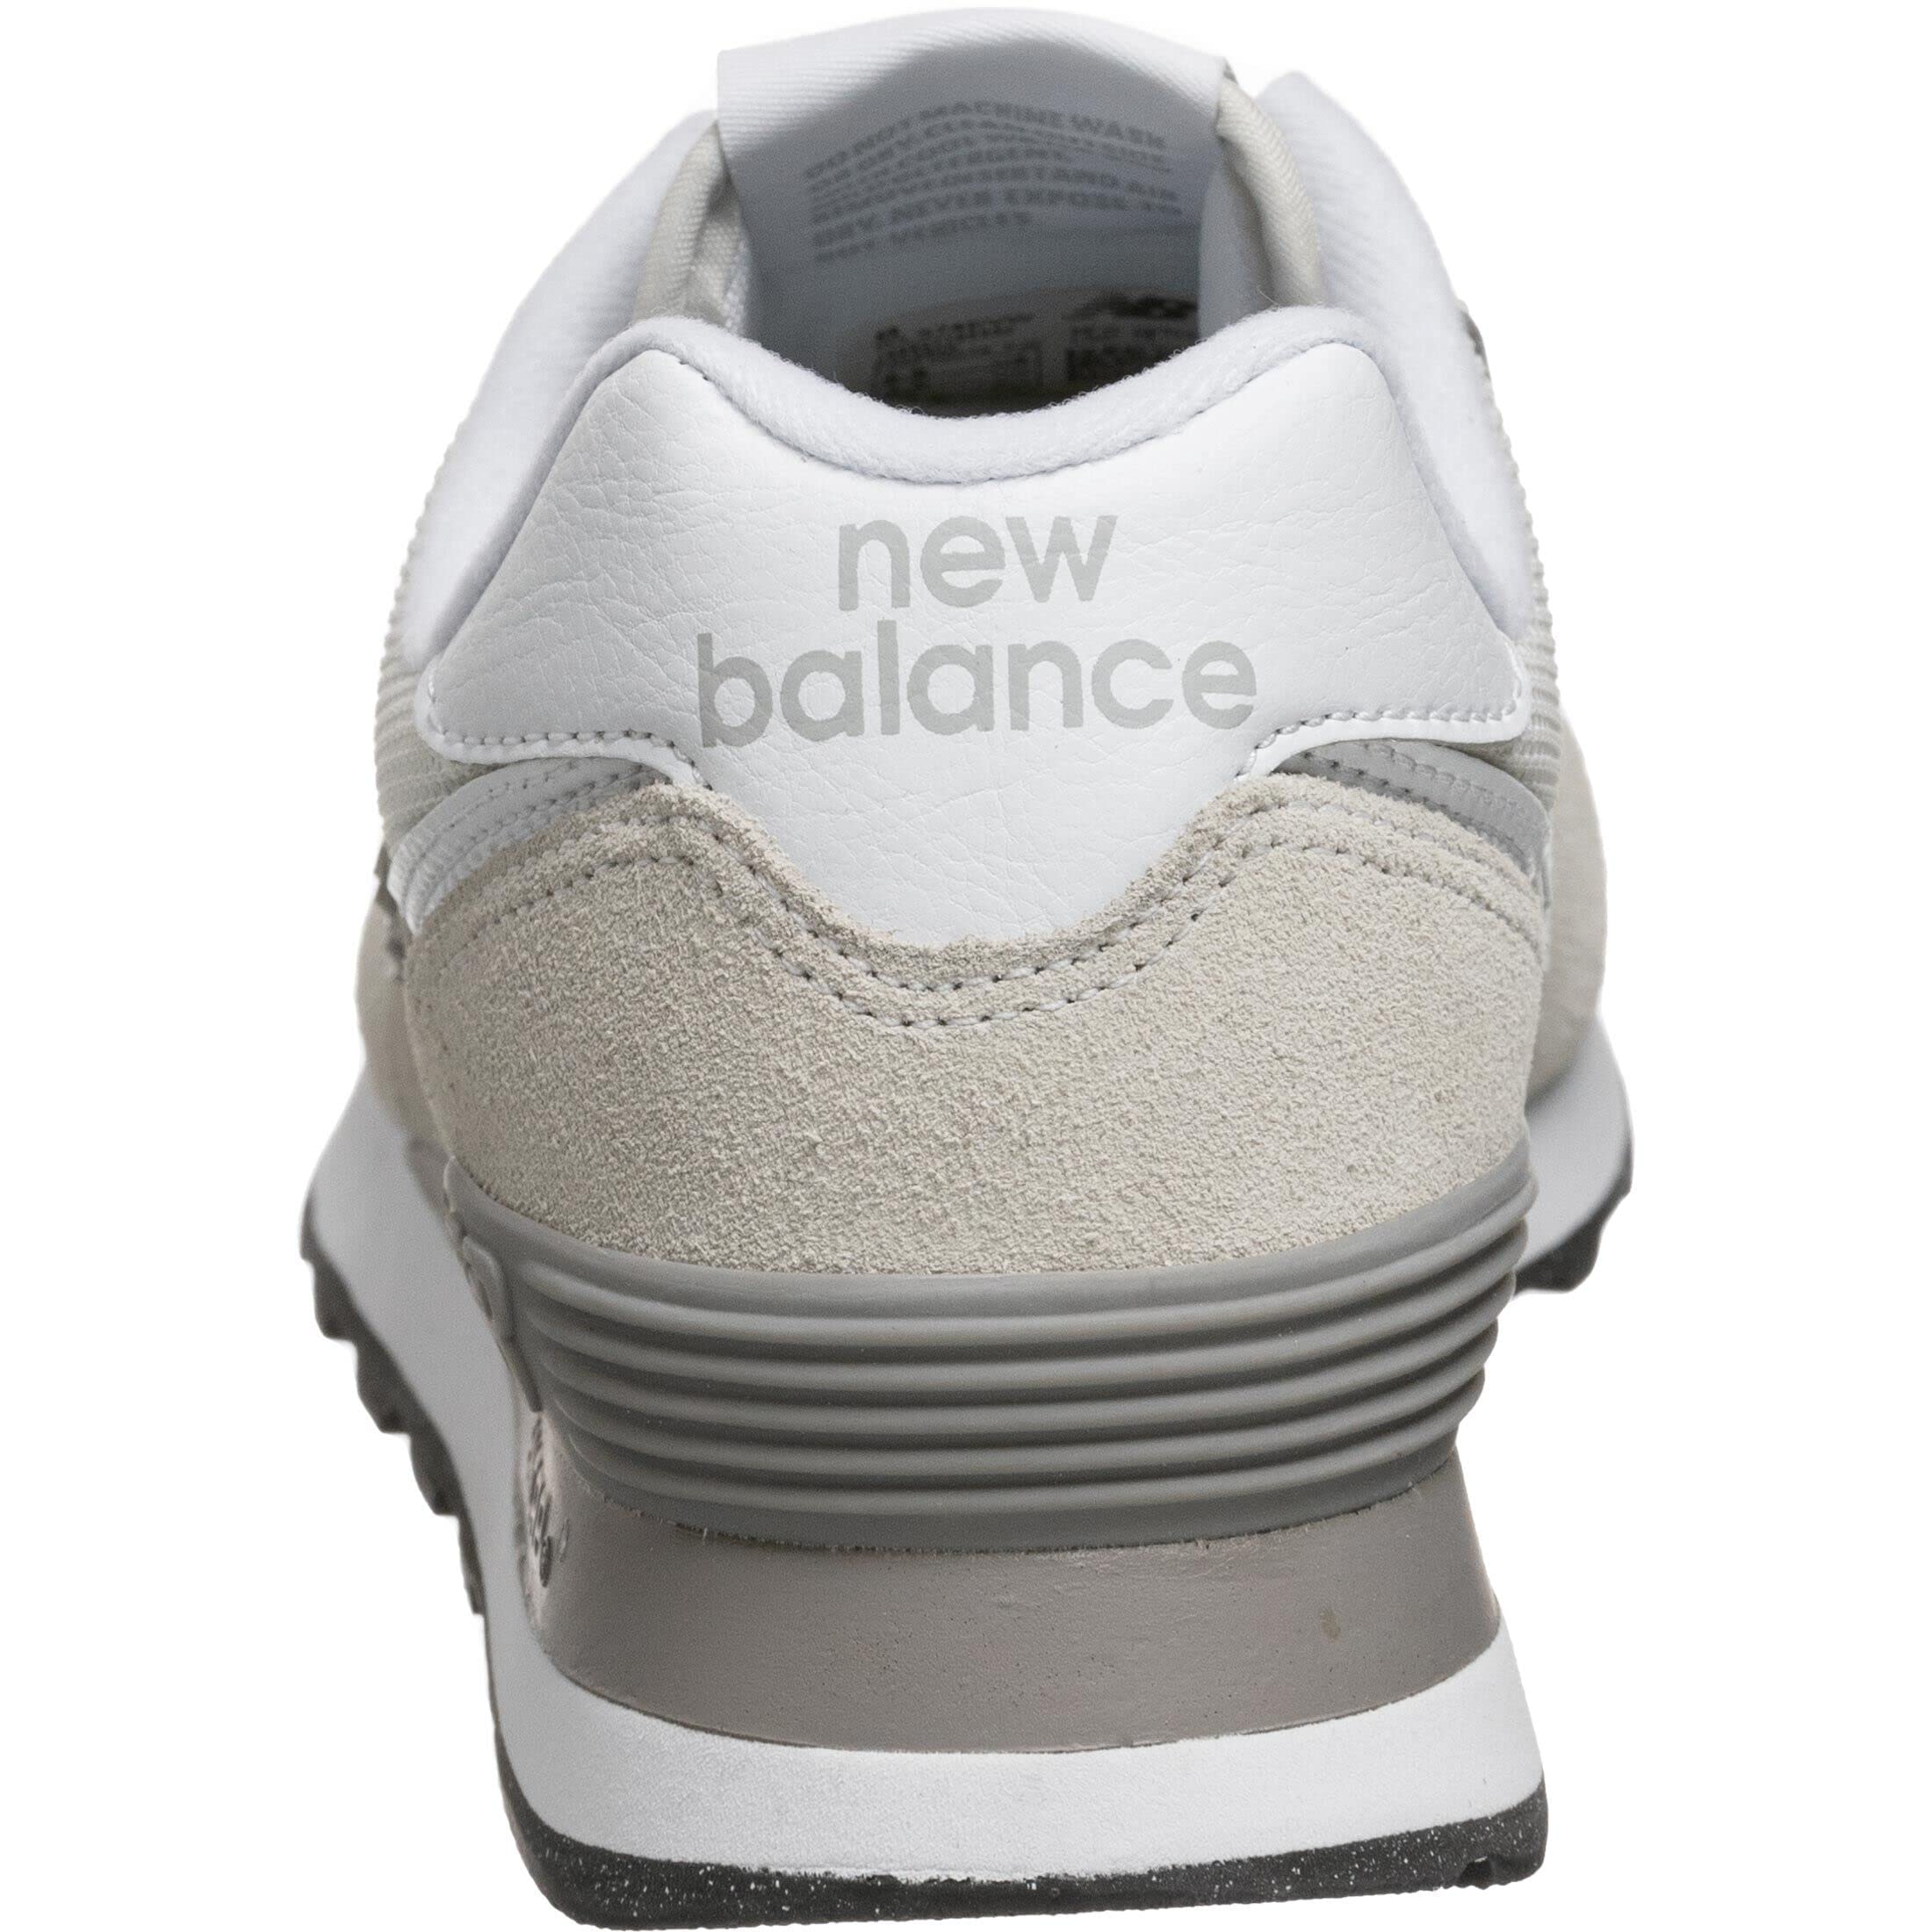 New Balance Women's 574 Core Sneaker